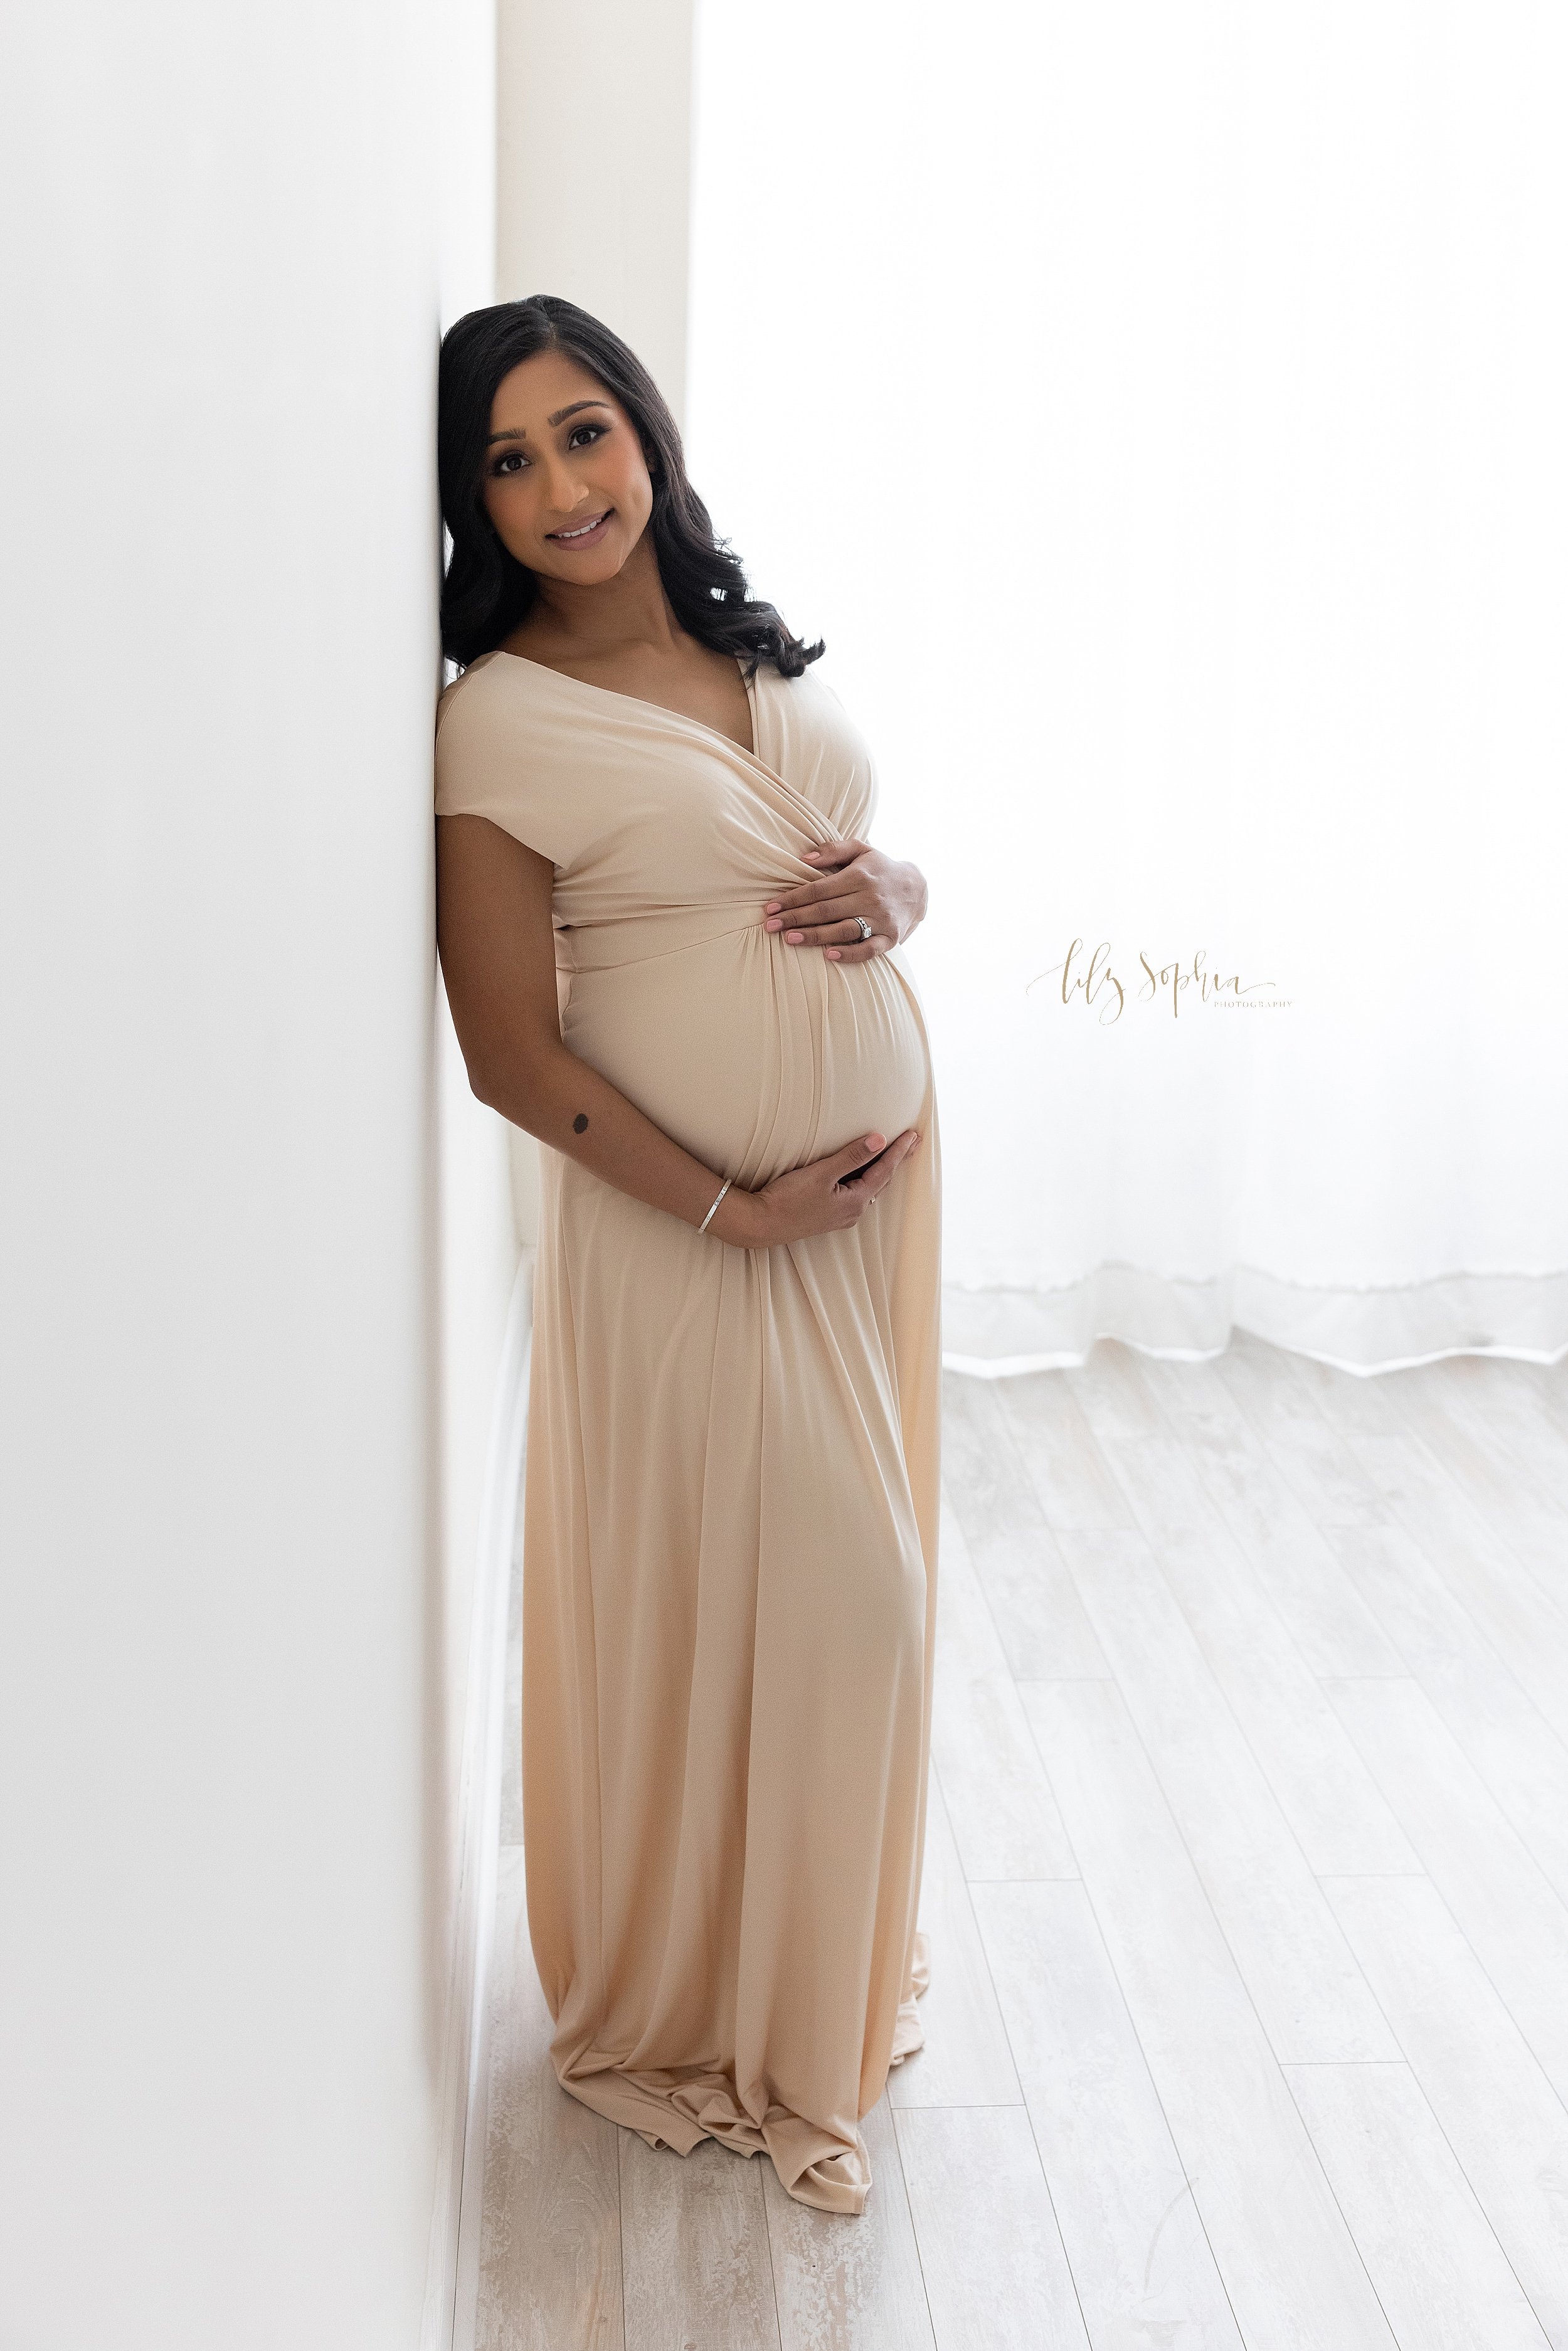 intown-atlanta-grant-park-decatur-oakhurst-duwoody-indian-couple-maternity-photoshoot-baby-girl-pregnancy_2686.jpg